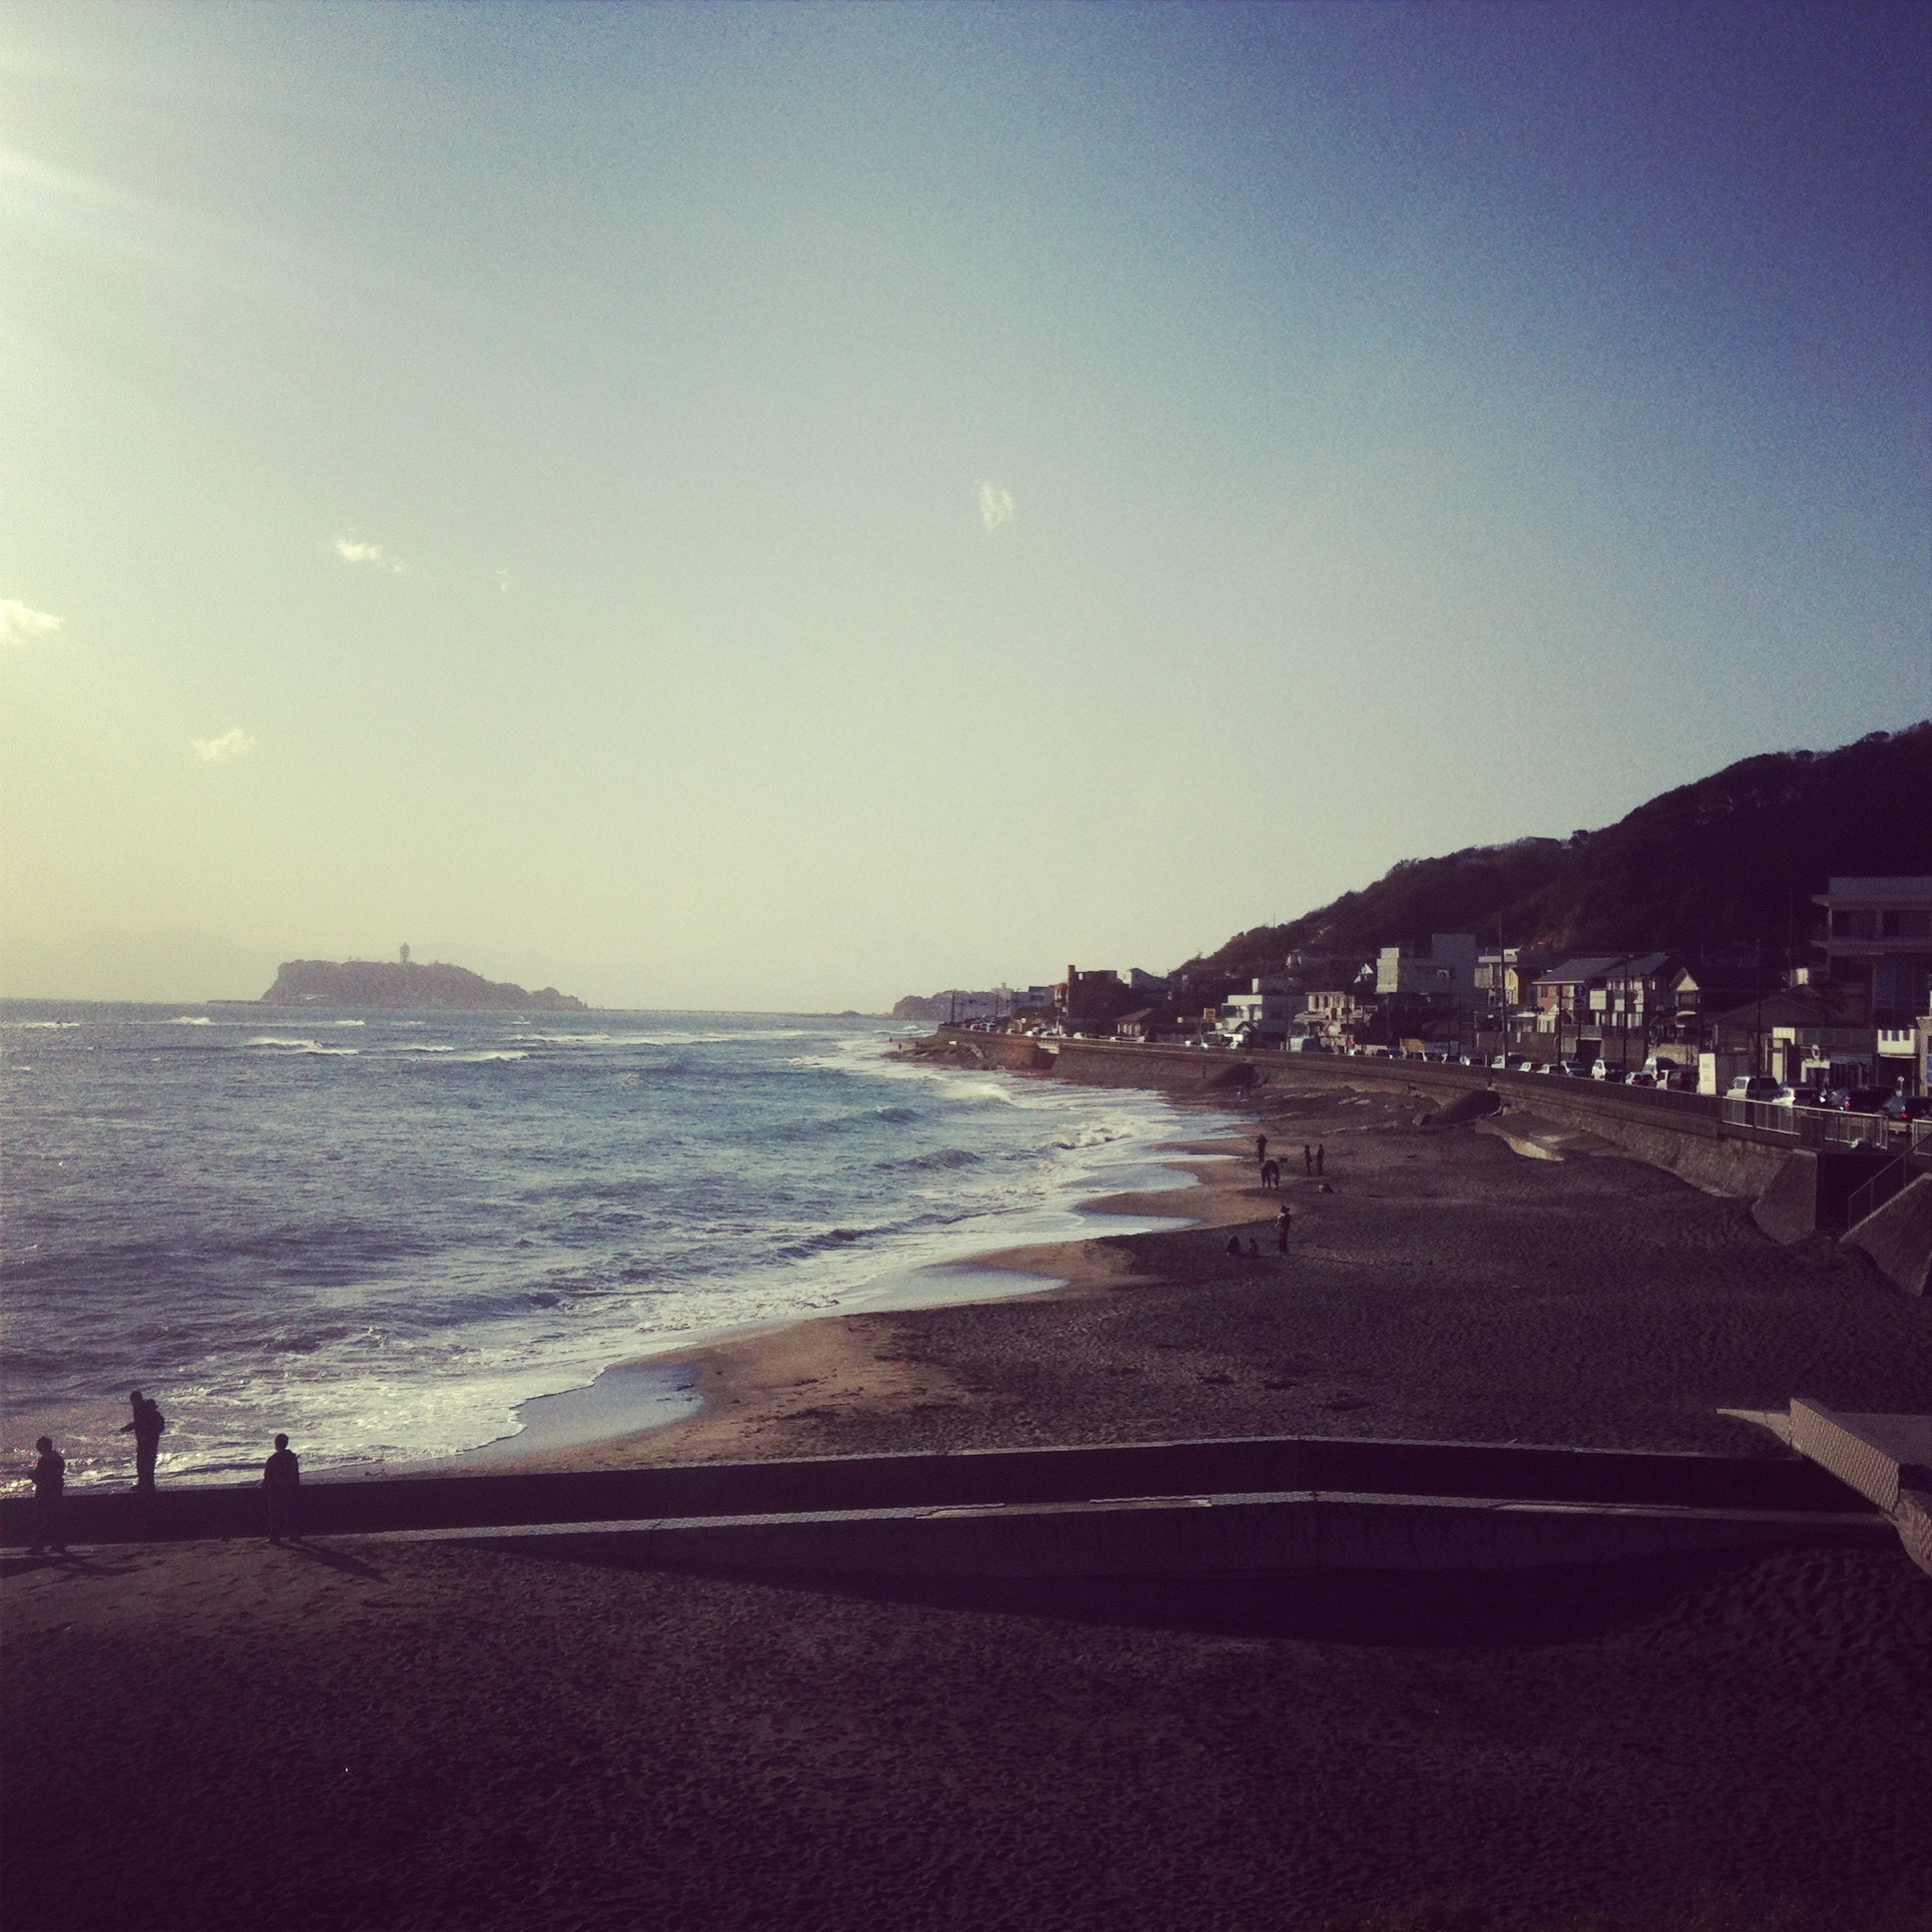 Explore the Kamakura coast, beach by bicycle and board